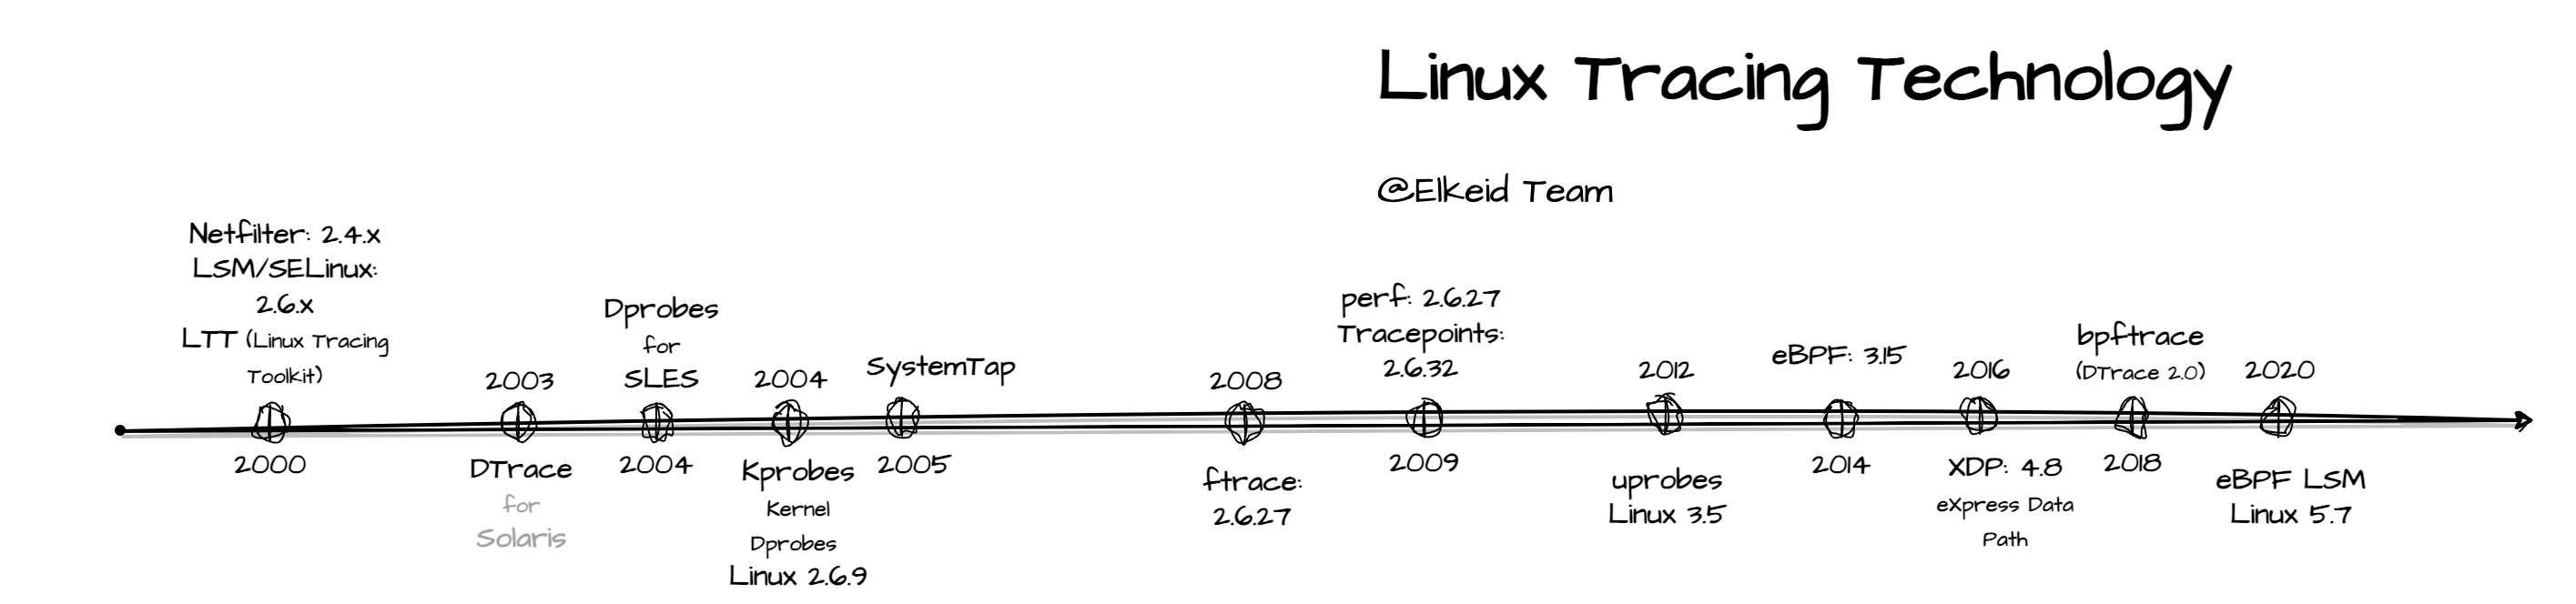 Linux Tracing Timeline